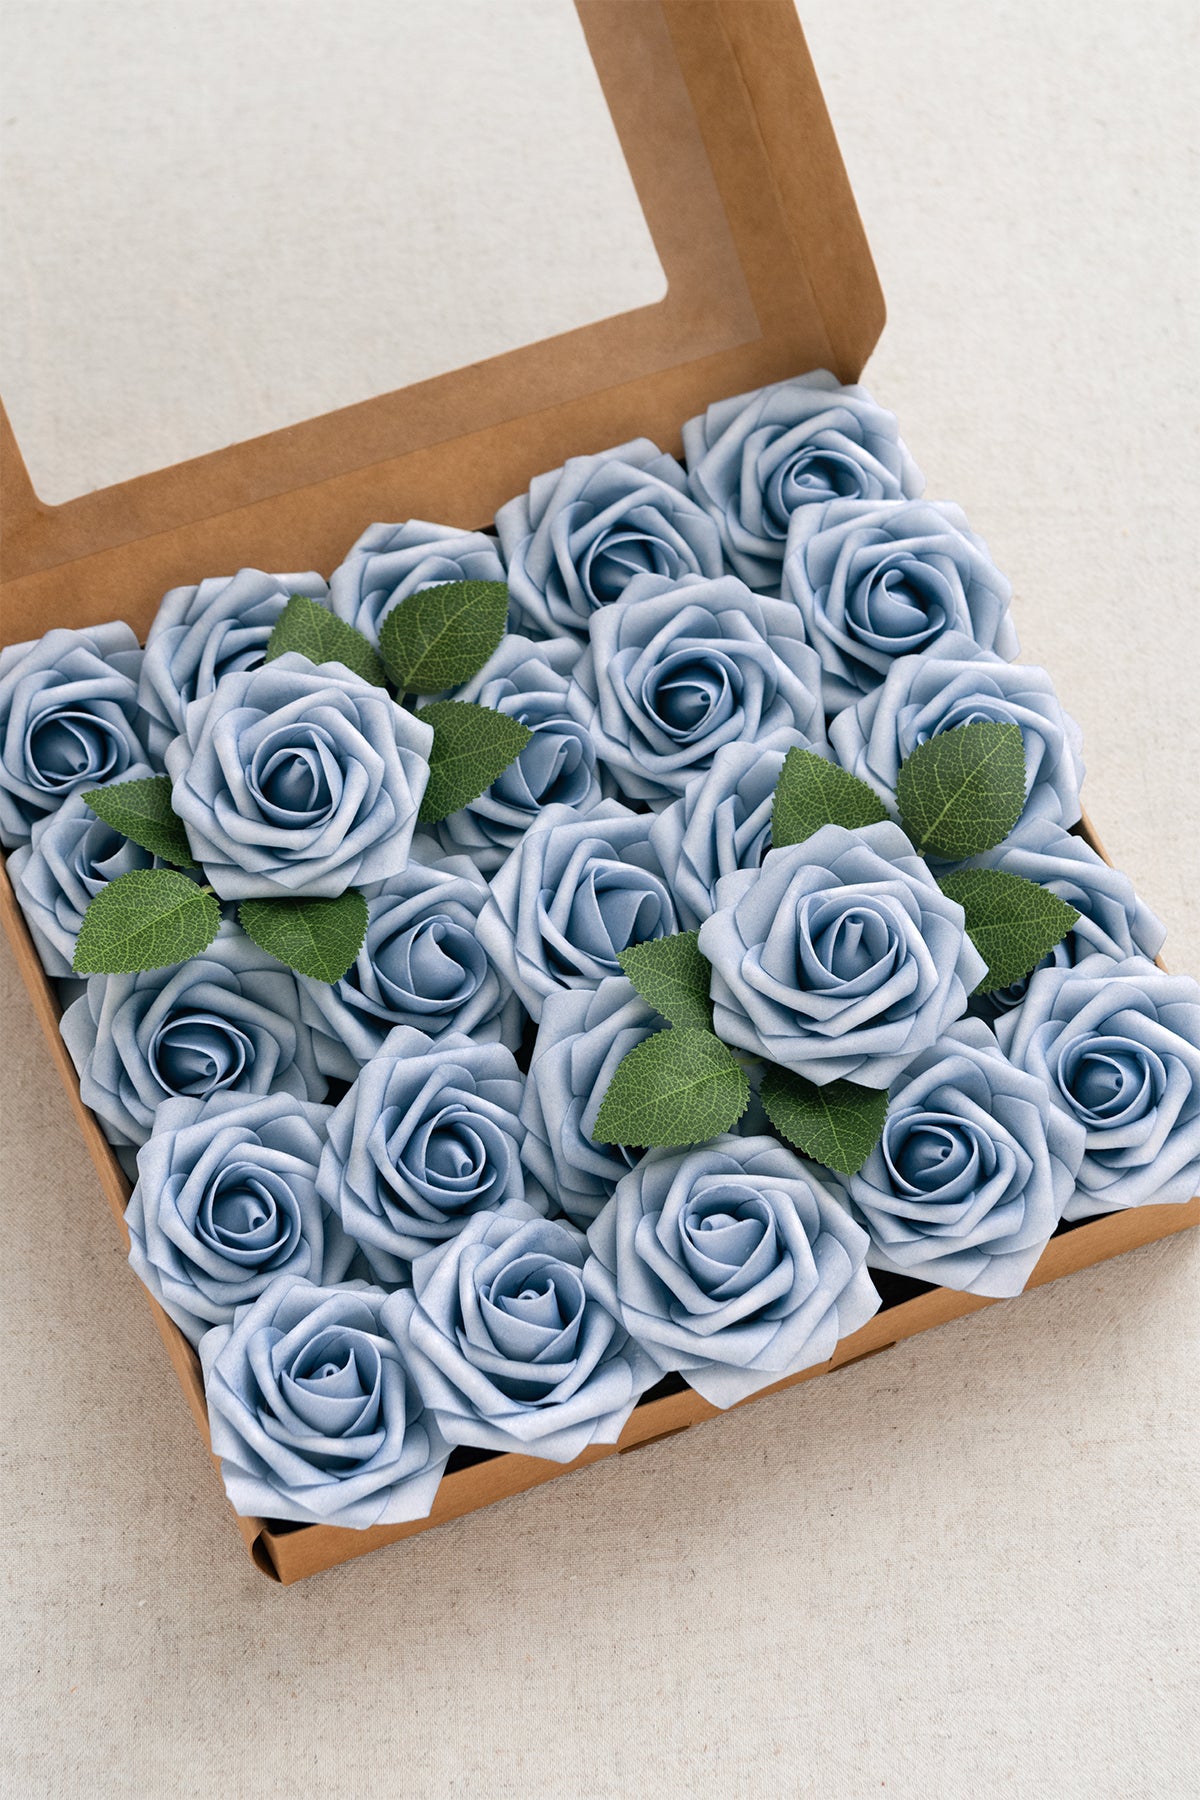 DIY Supporting Flower Boxes in Russet Orange & Denim Blue